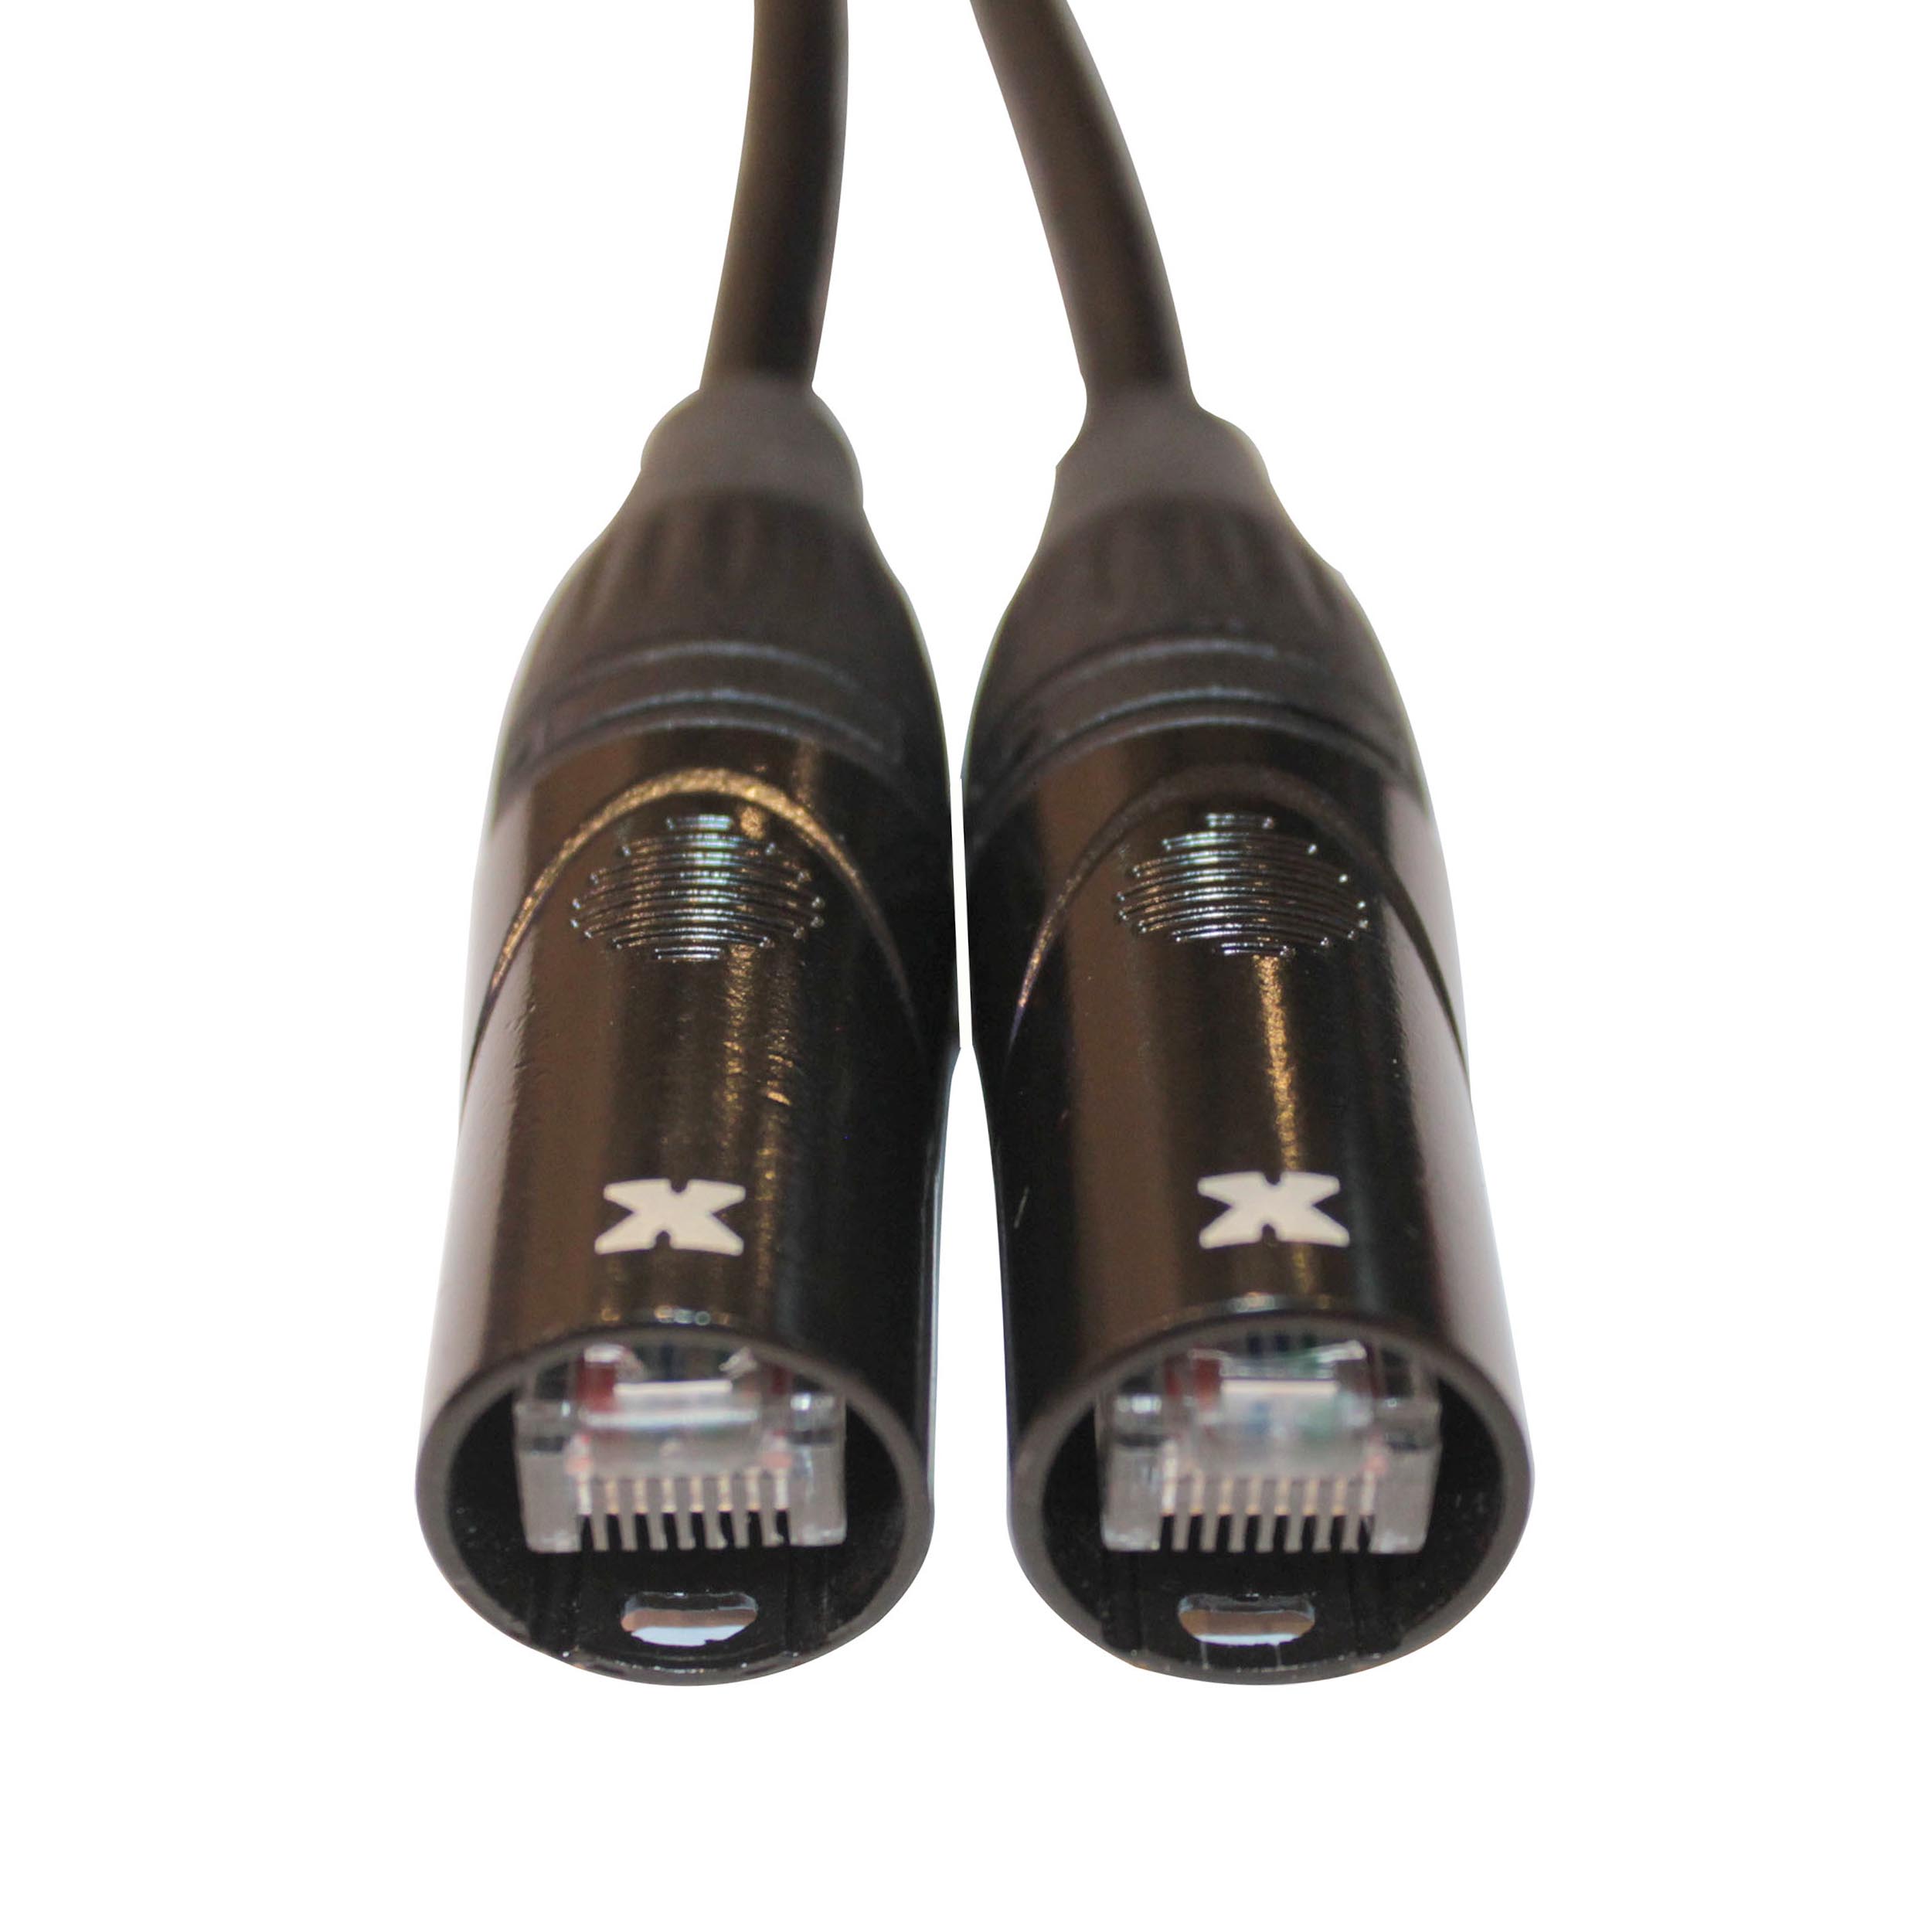 prox-xc-cat6-10-10ft-cat-6-cable.jpg